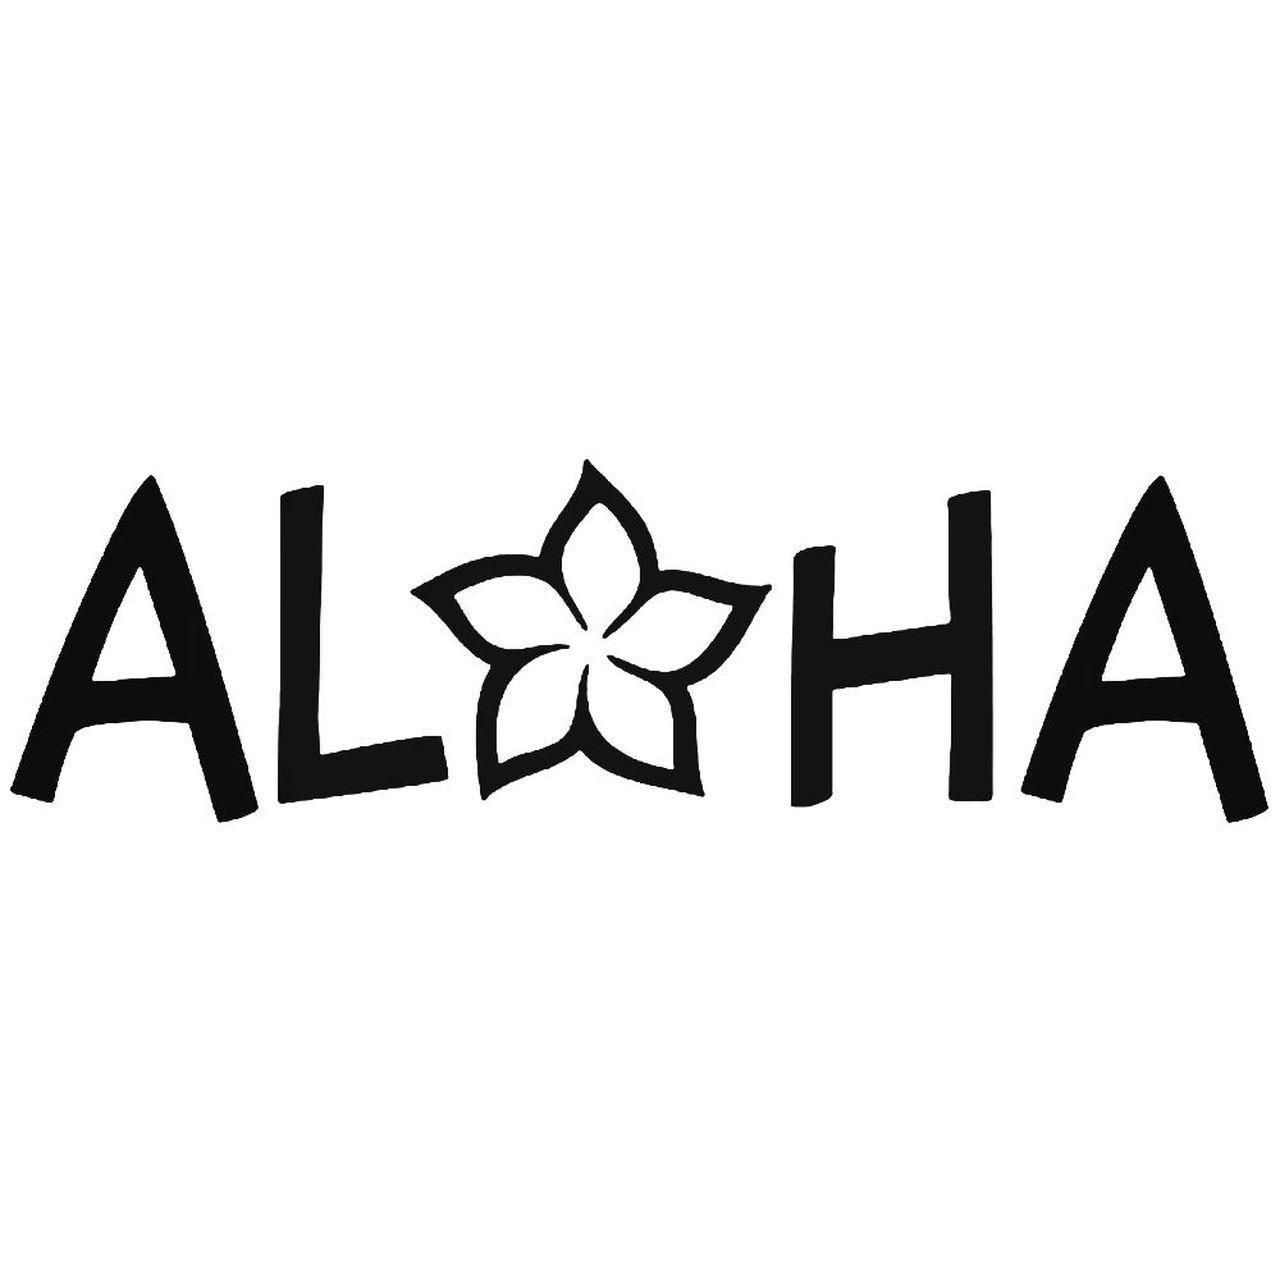 Plumeria Logo - Hawaii Aloha Plumeria Flower Vinyl Decal Sticker